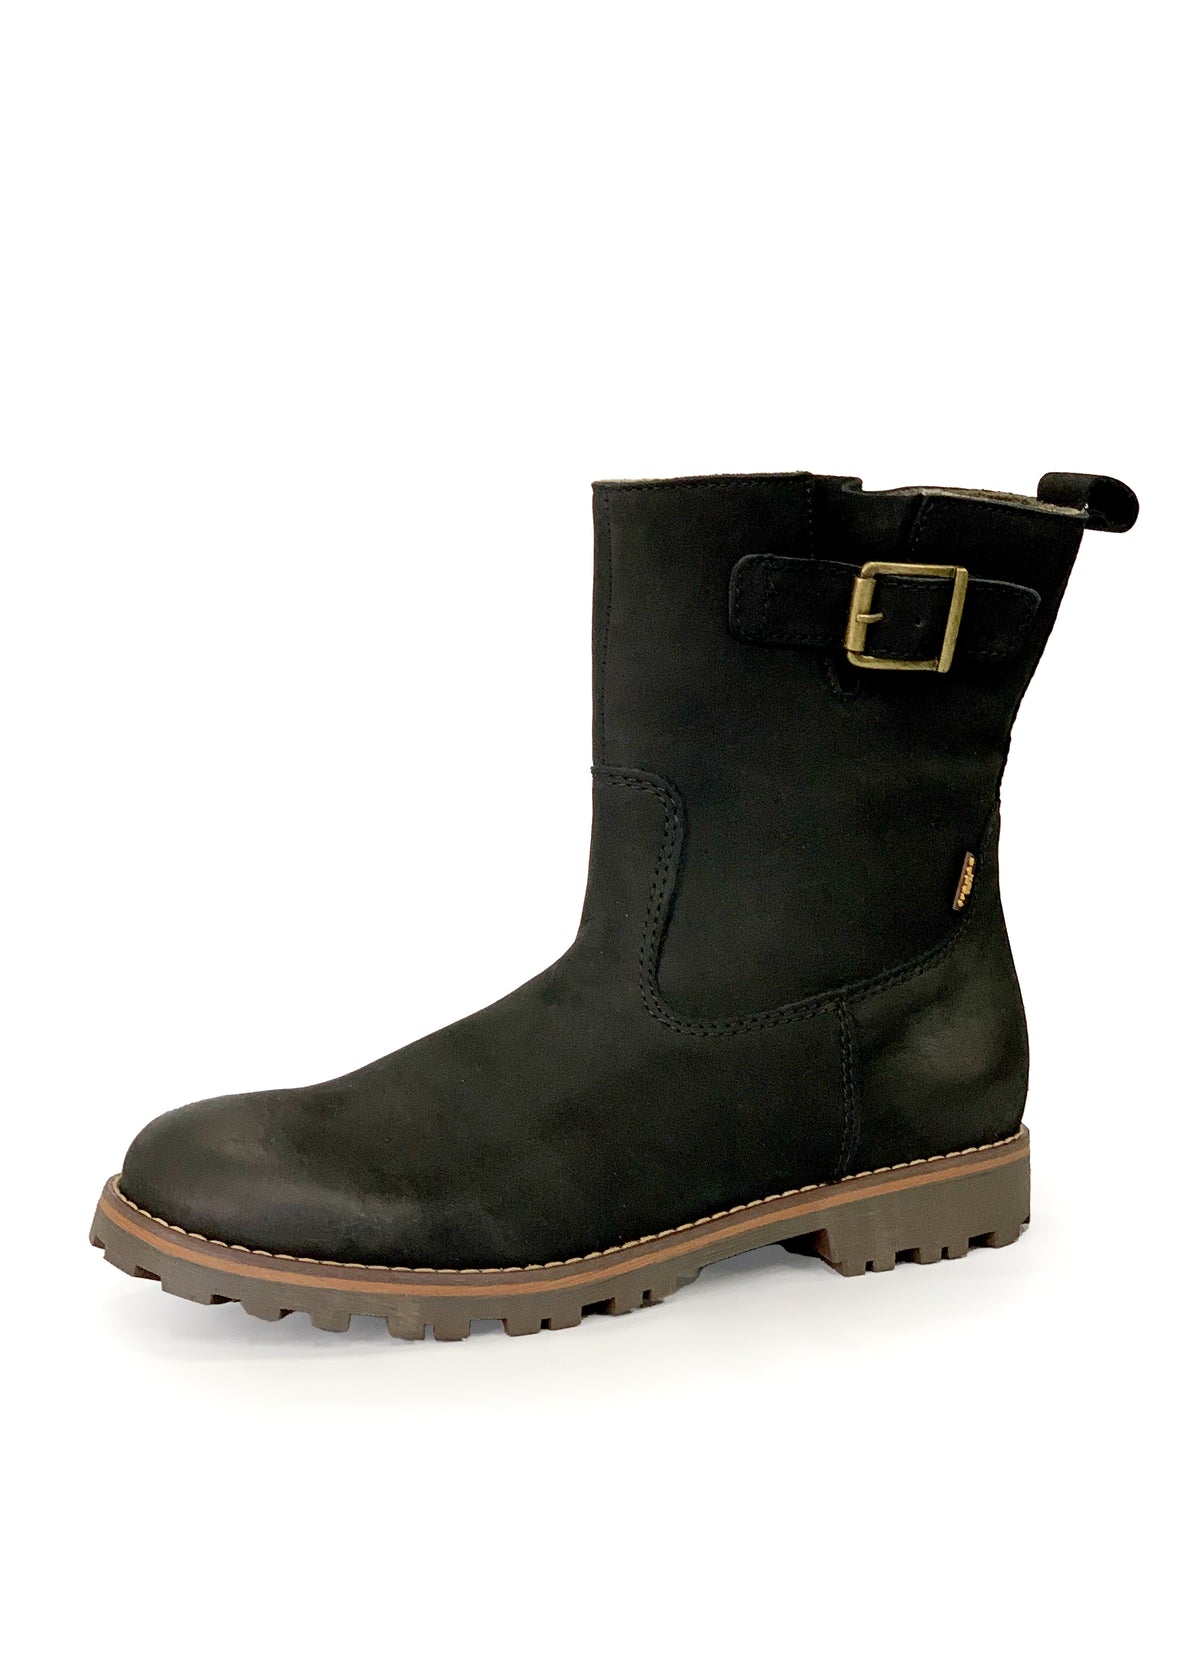 Winter boots - black, buckle decoration, Froddo-TEX